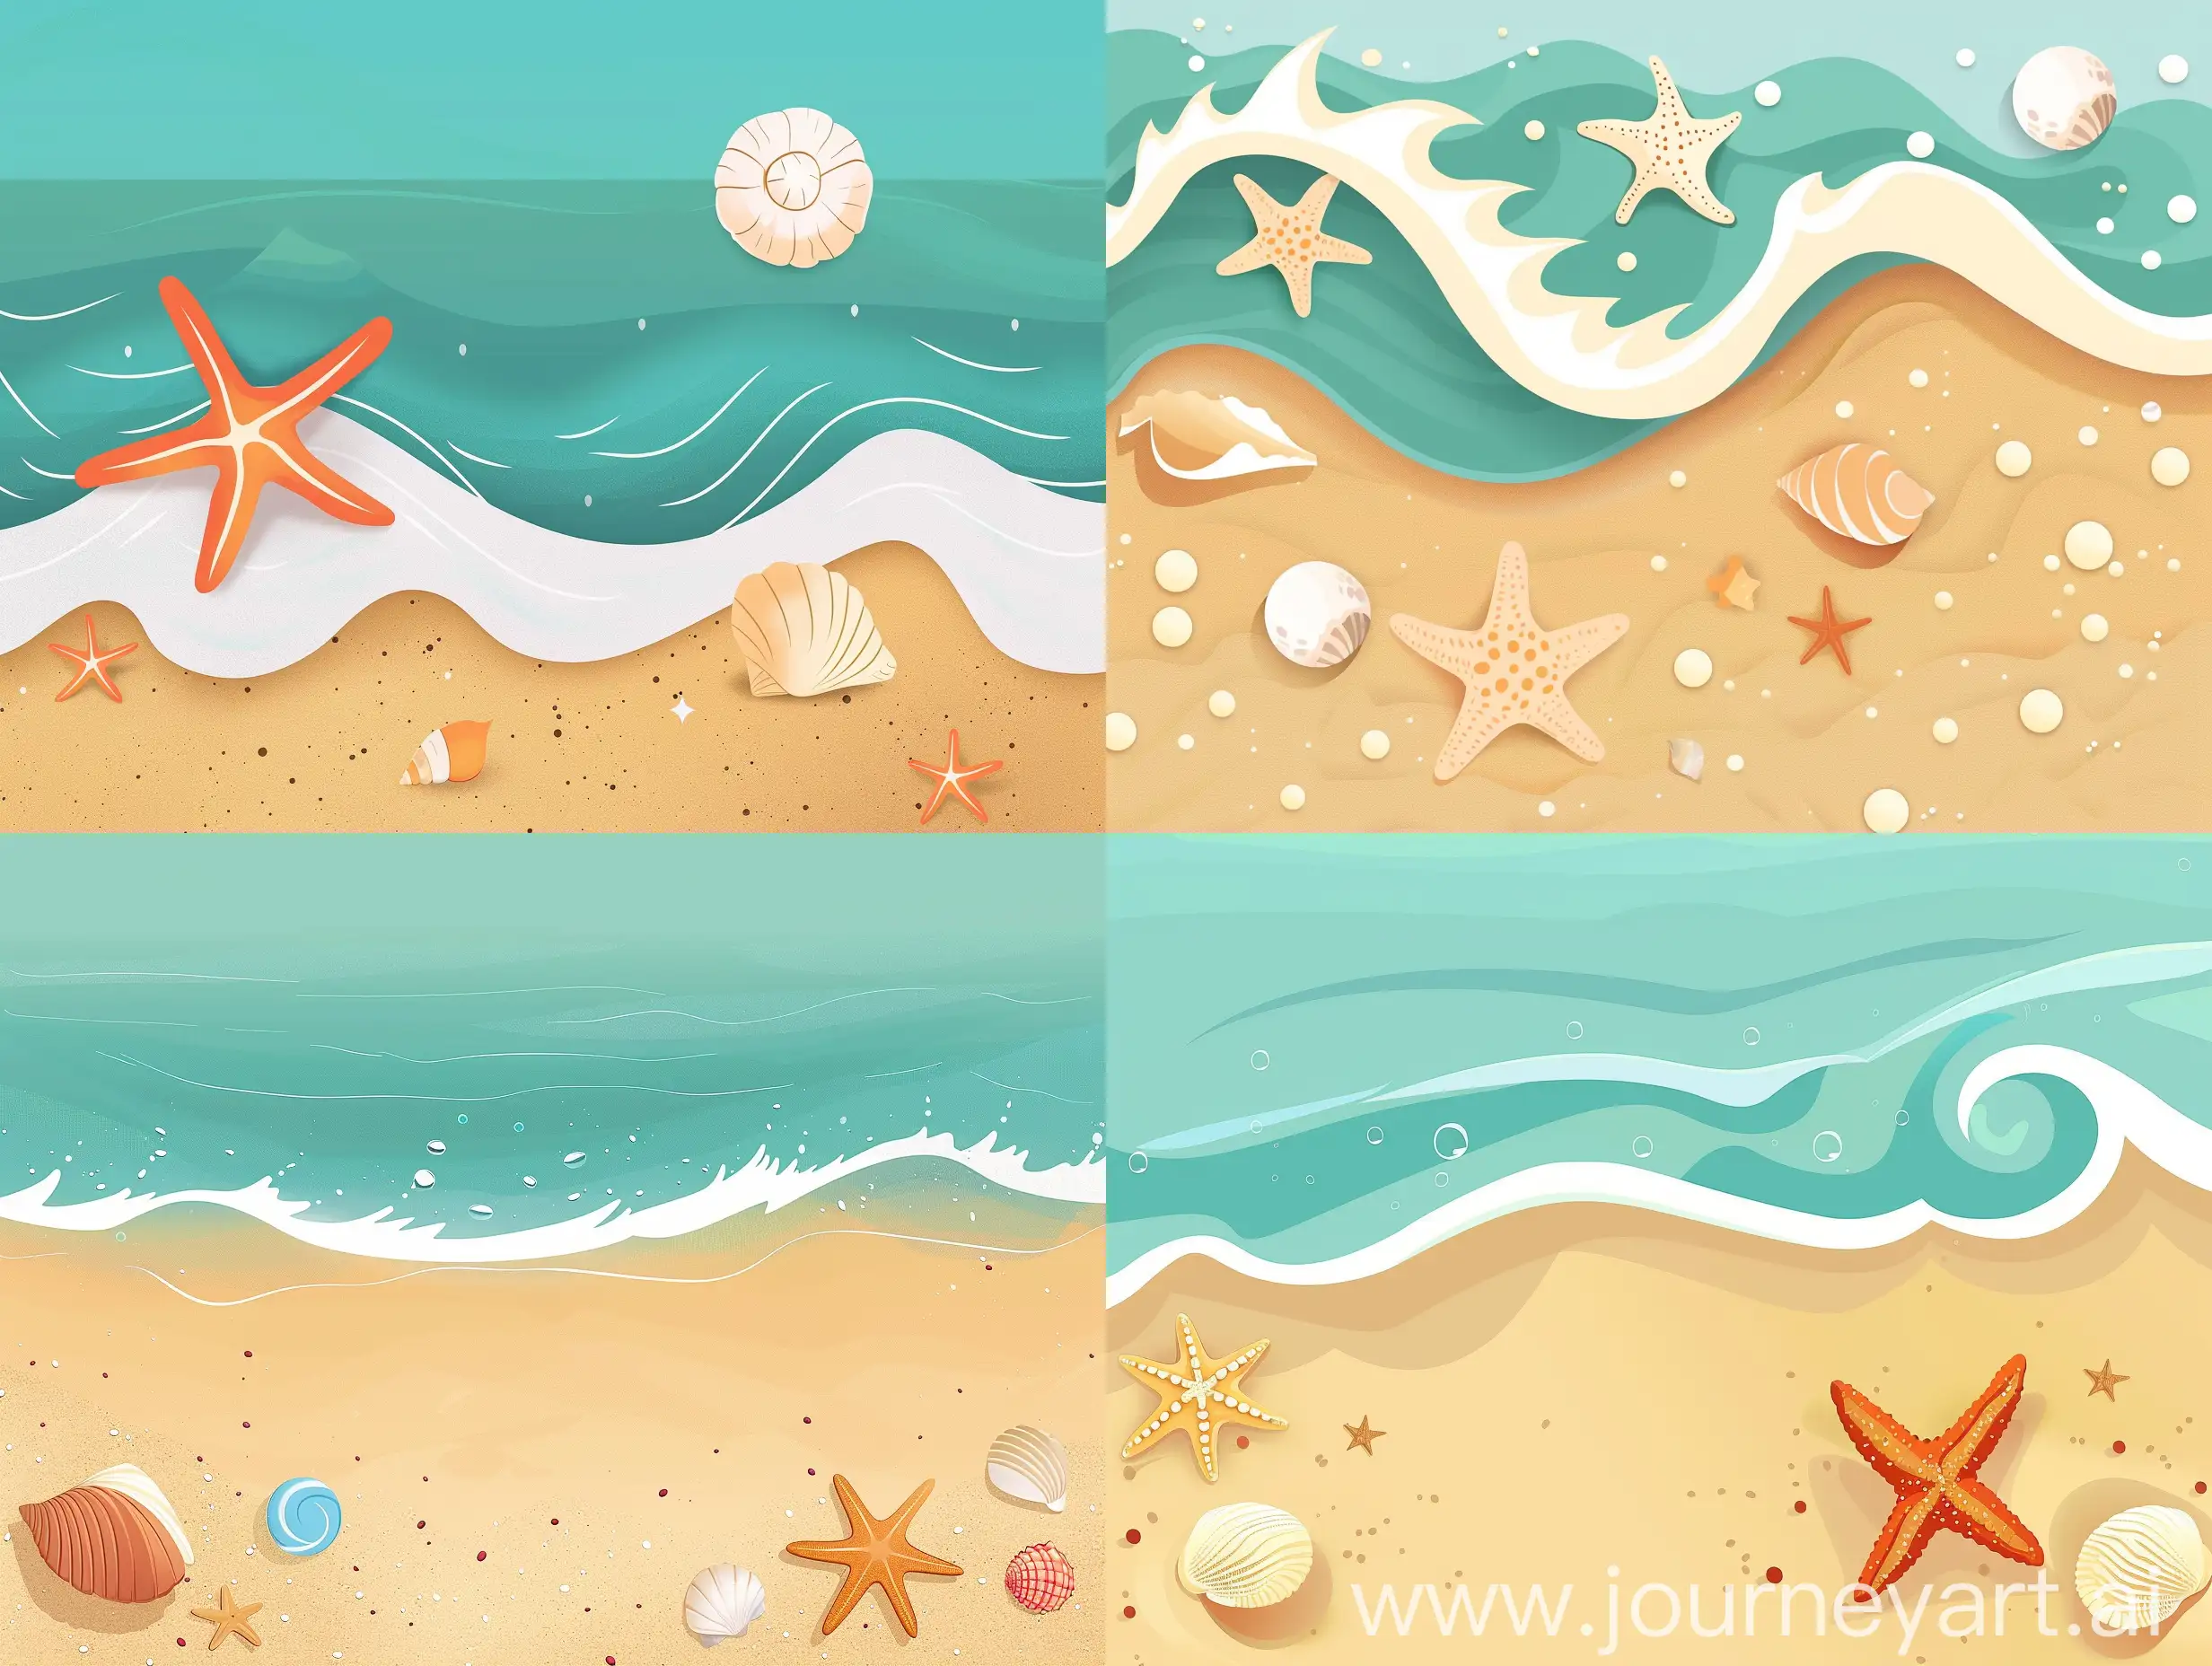 minimalism，flat-style，sense-of-depth，ocean-wave，sand-beach，ocean，starfish，seashell，Beach-balls